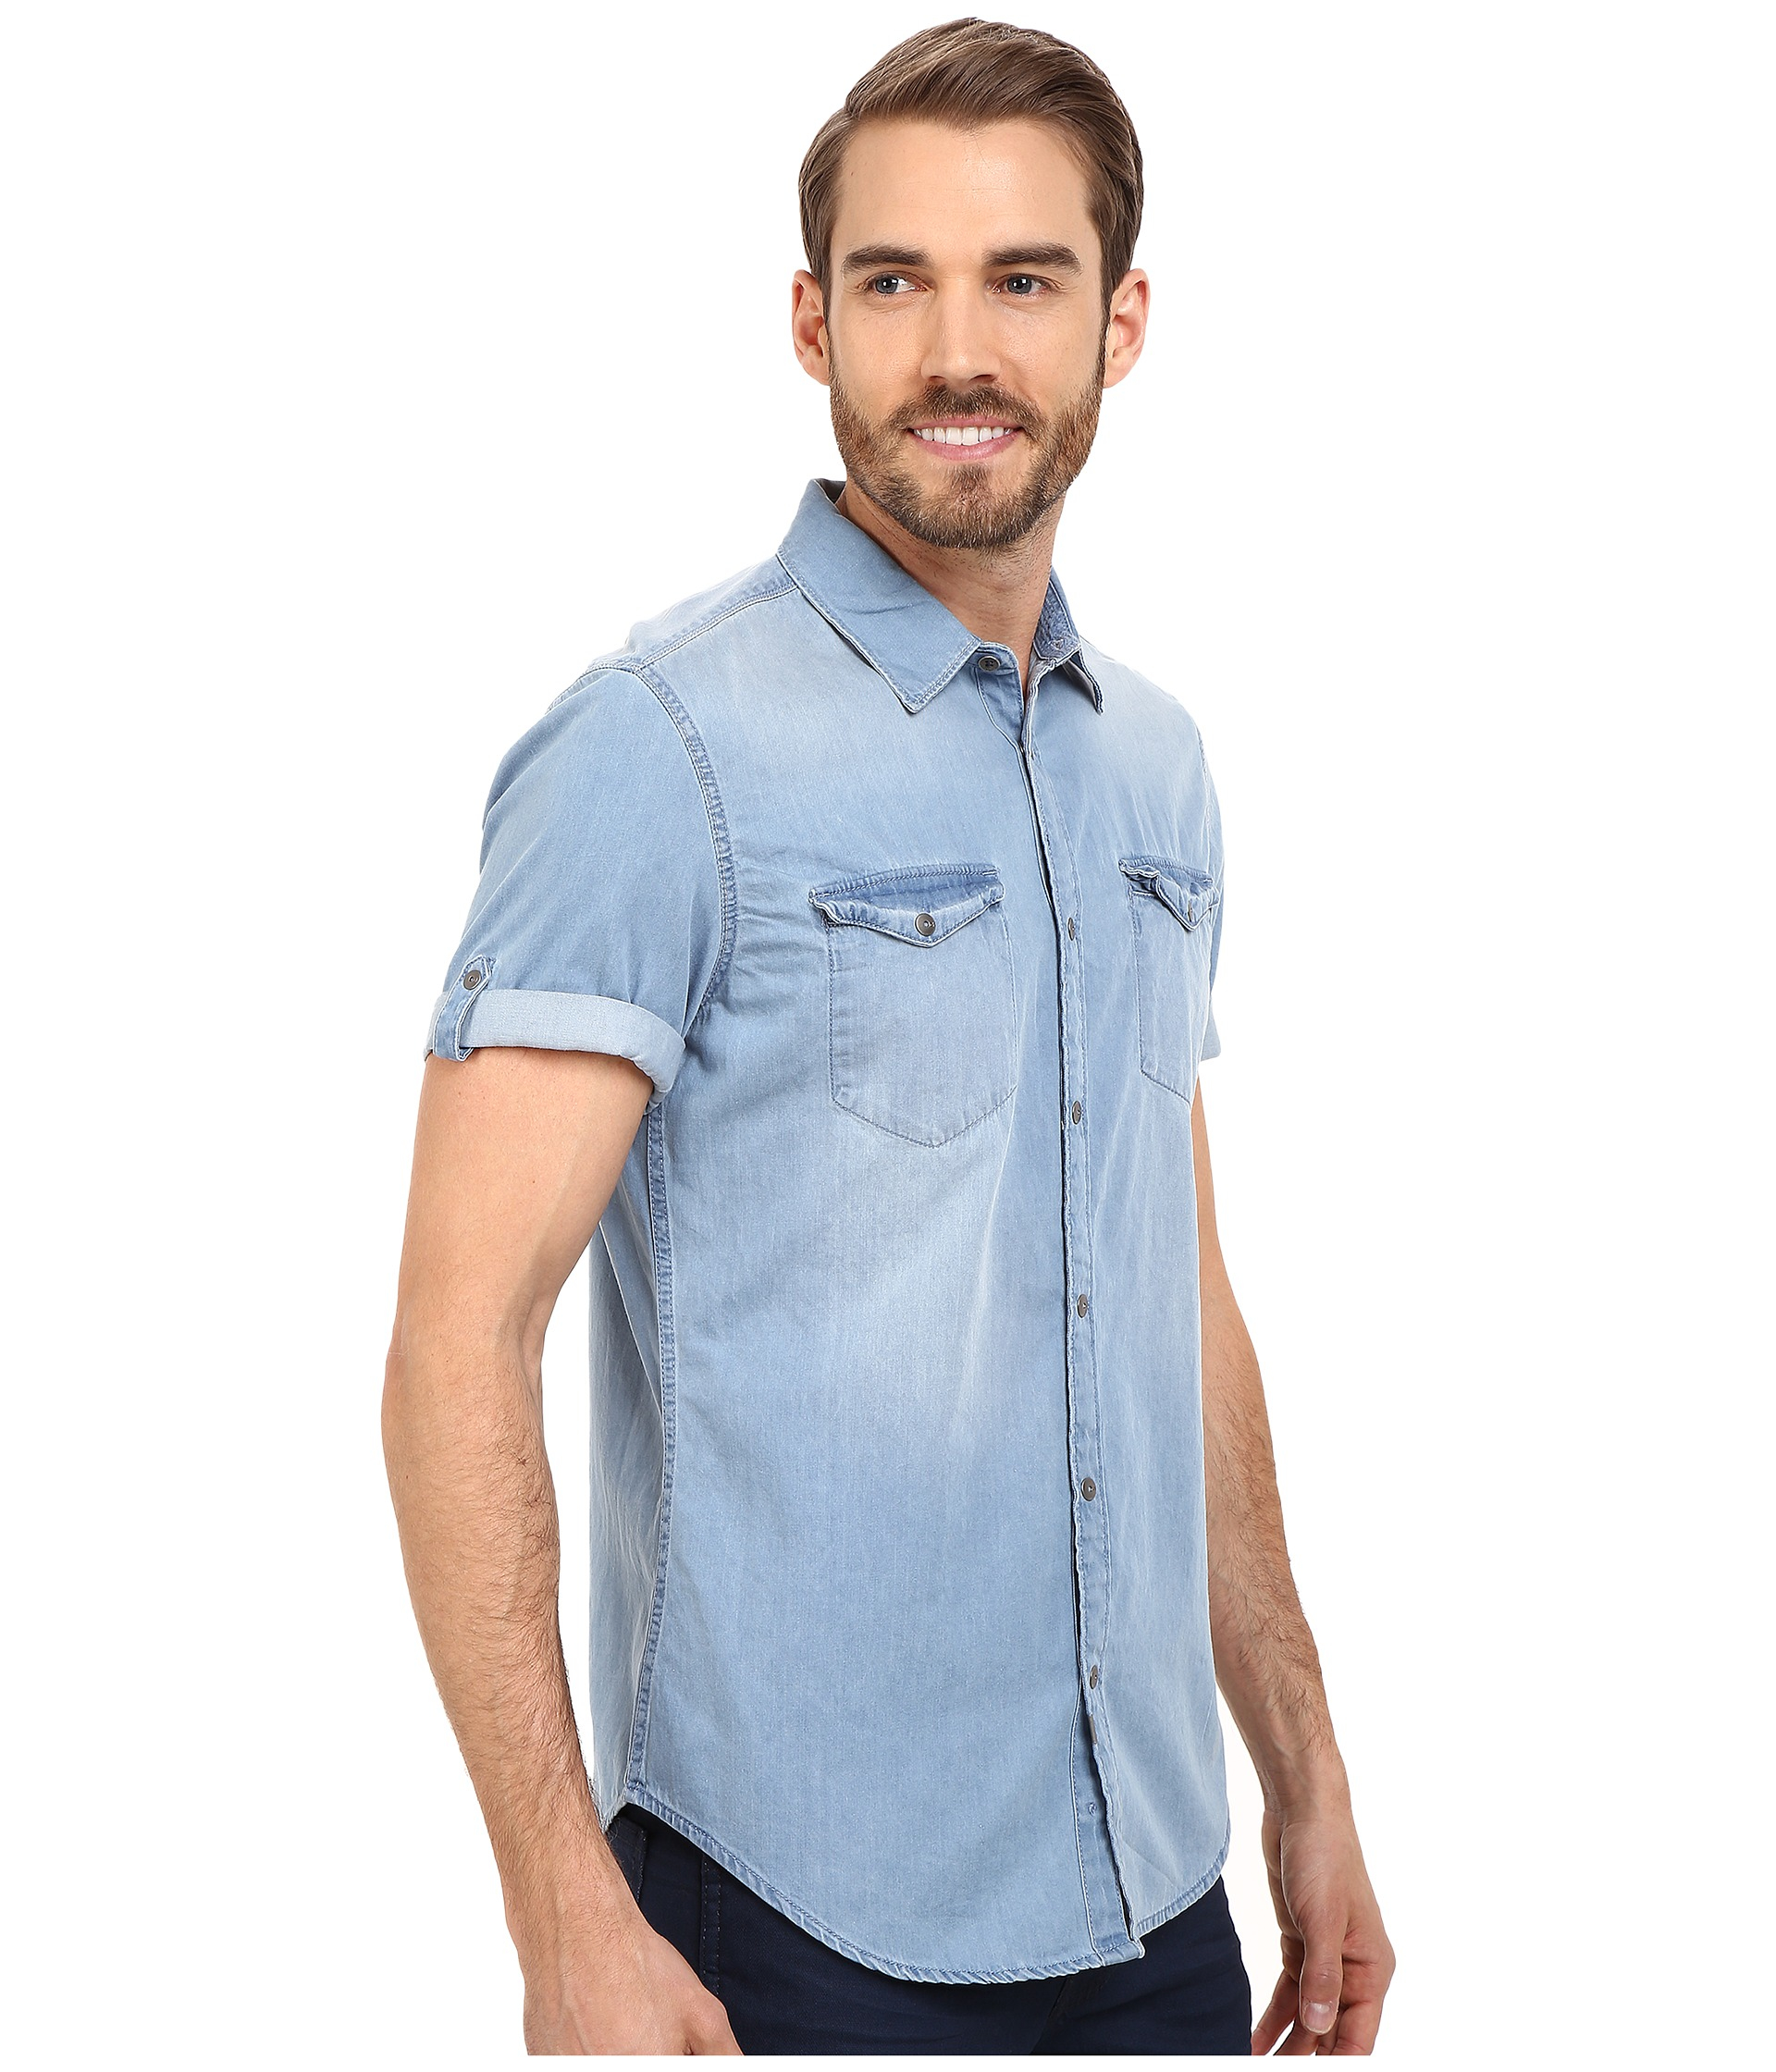 Calvin Klein Cotton Short Sleeve Shirt in Blue for Men - Lyst